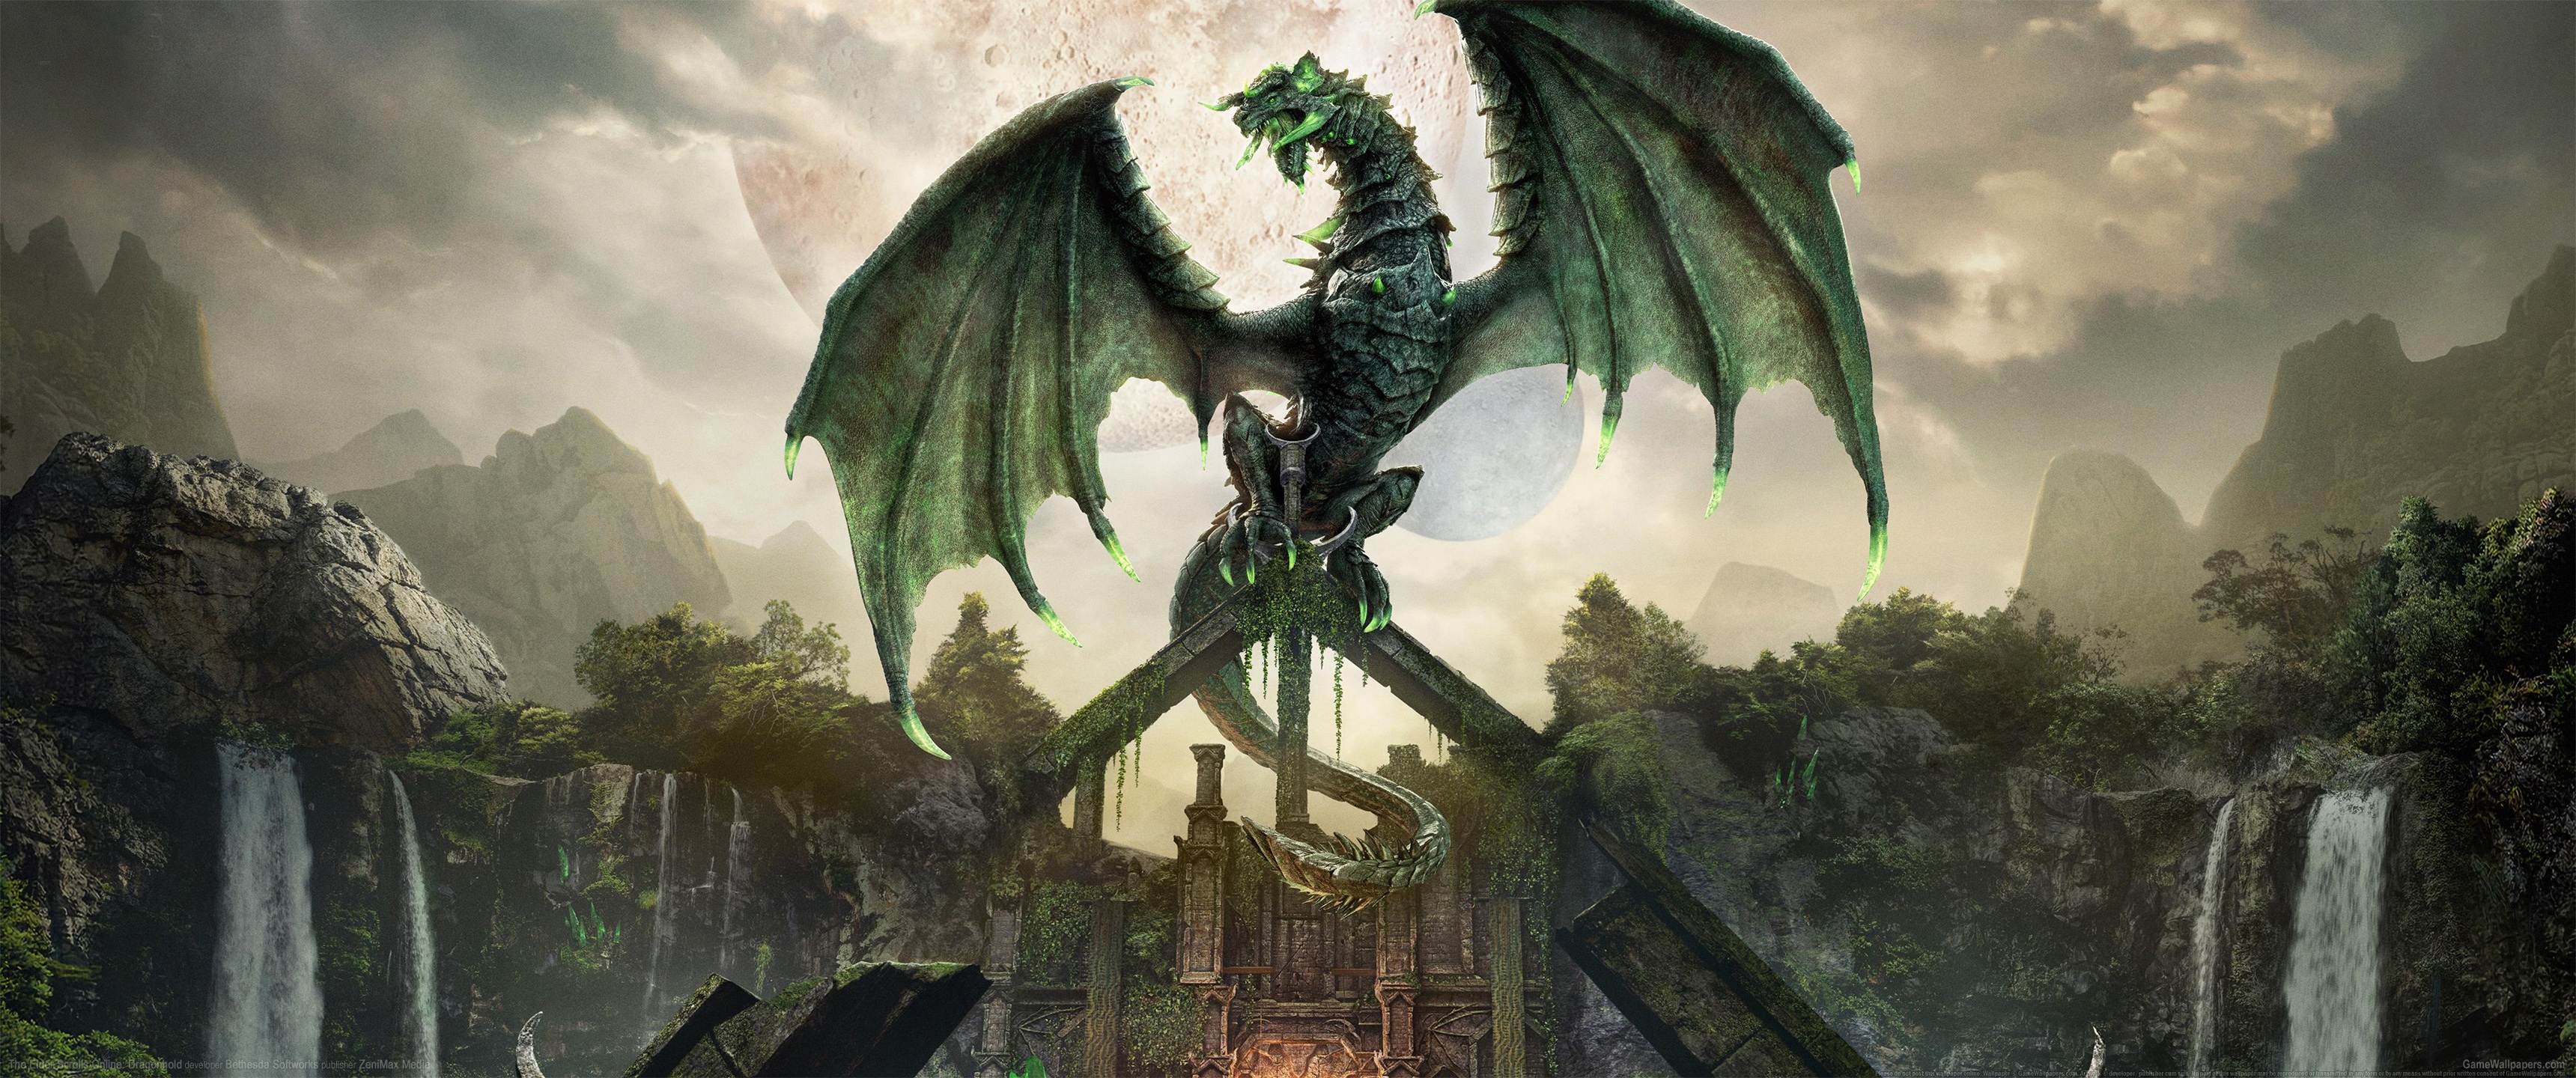 The Elder Scrolls Online: Dragonhold 3440x1440 wallpaper or background 01